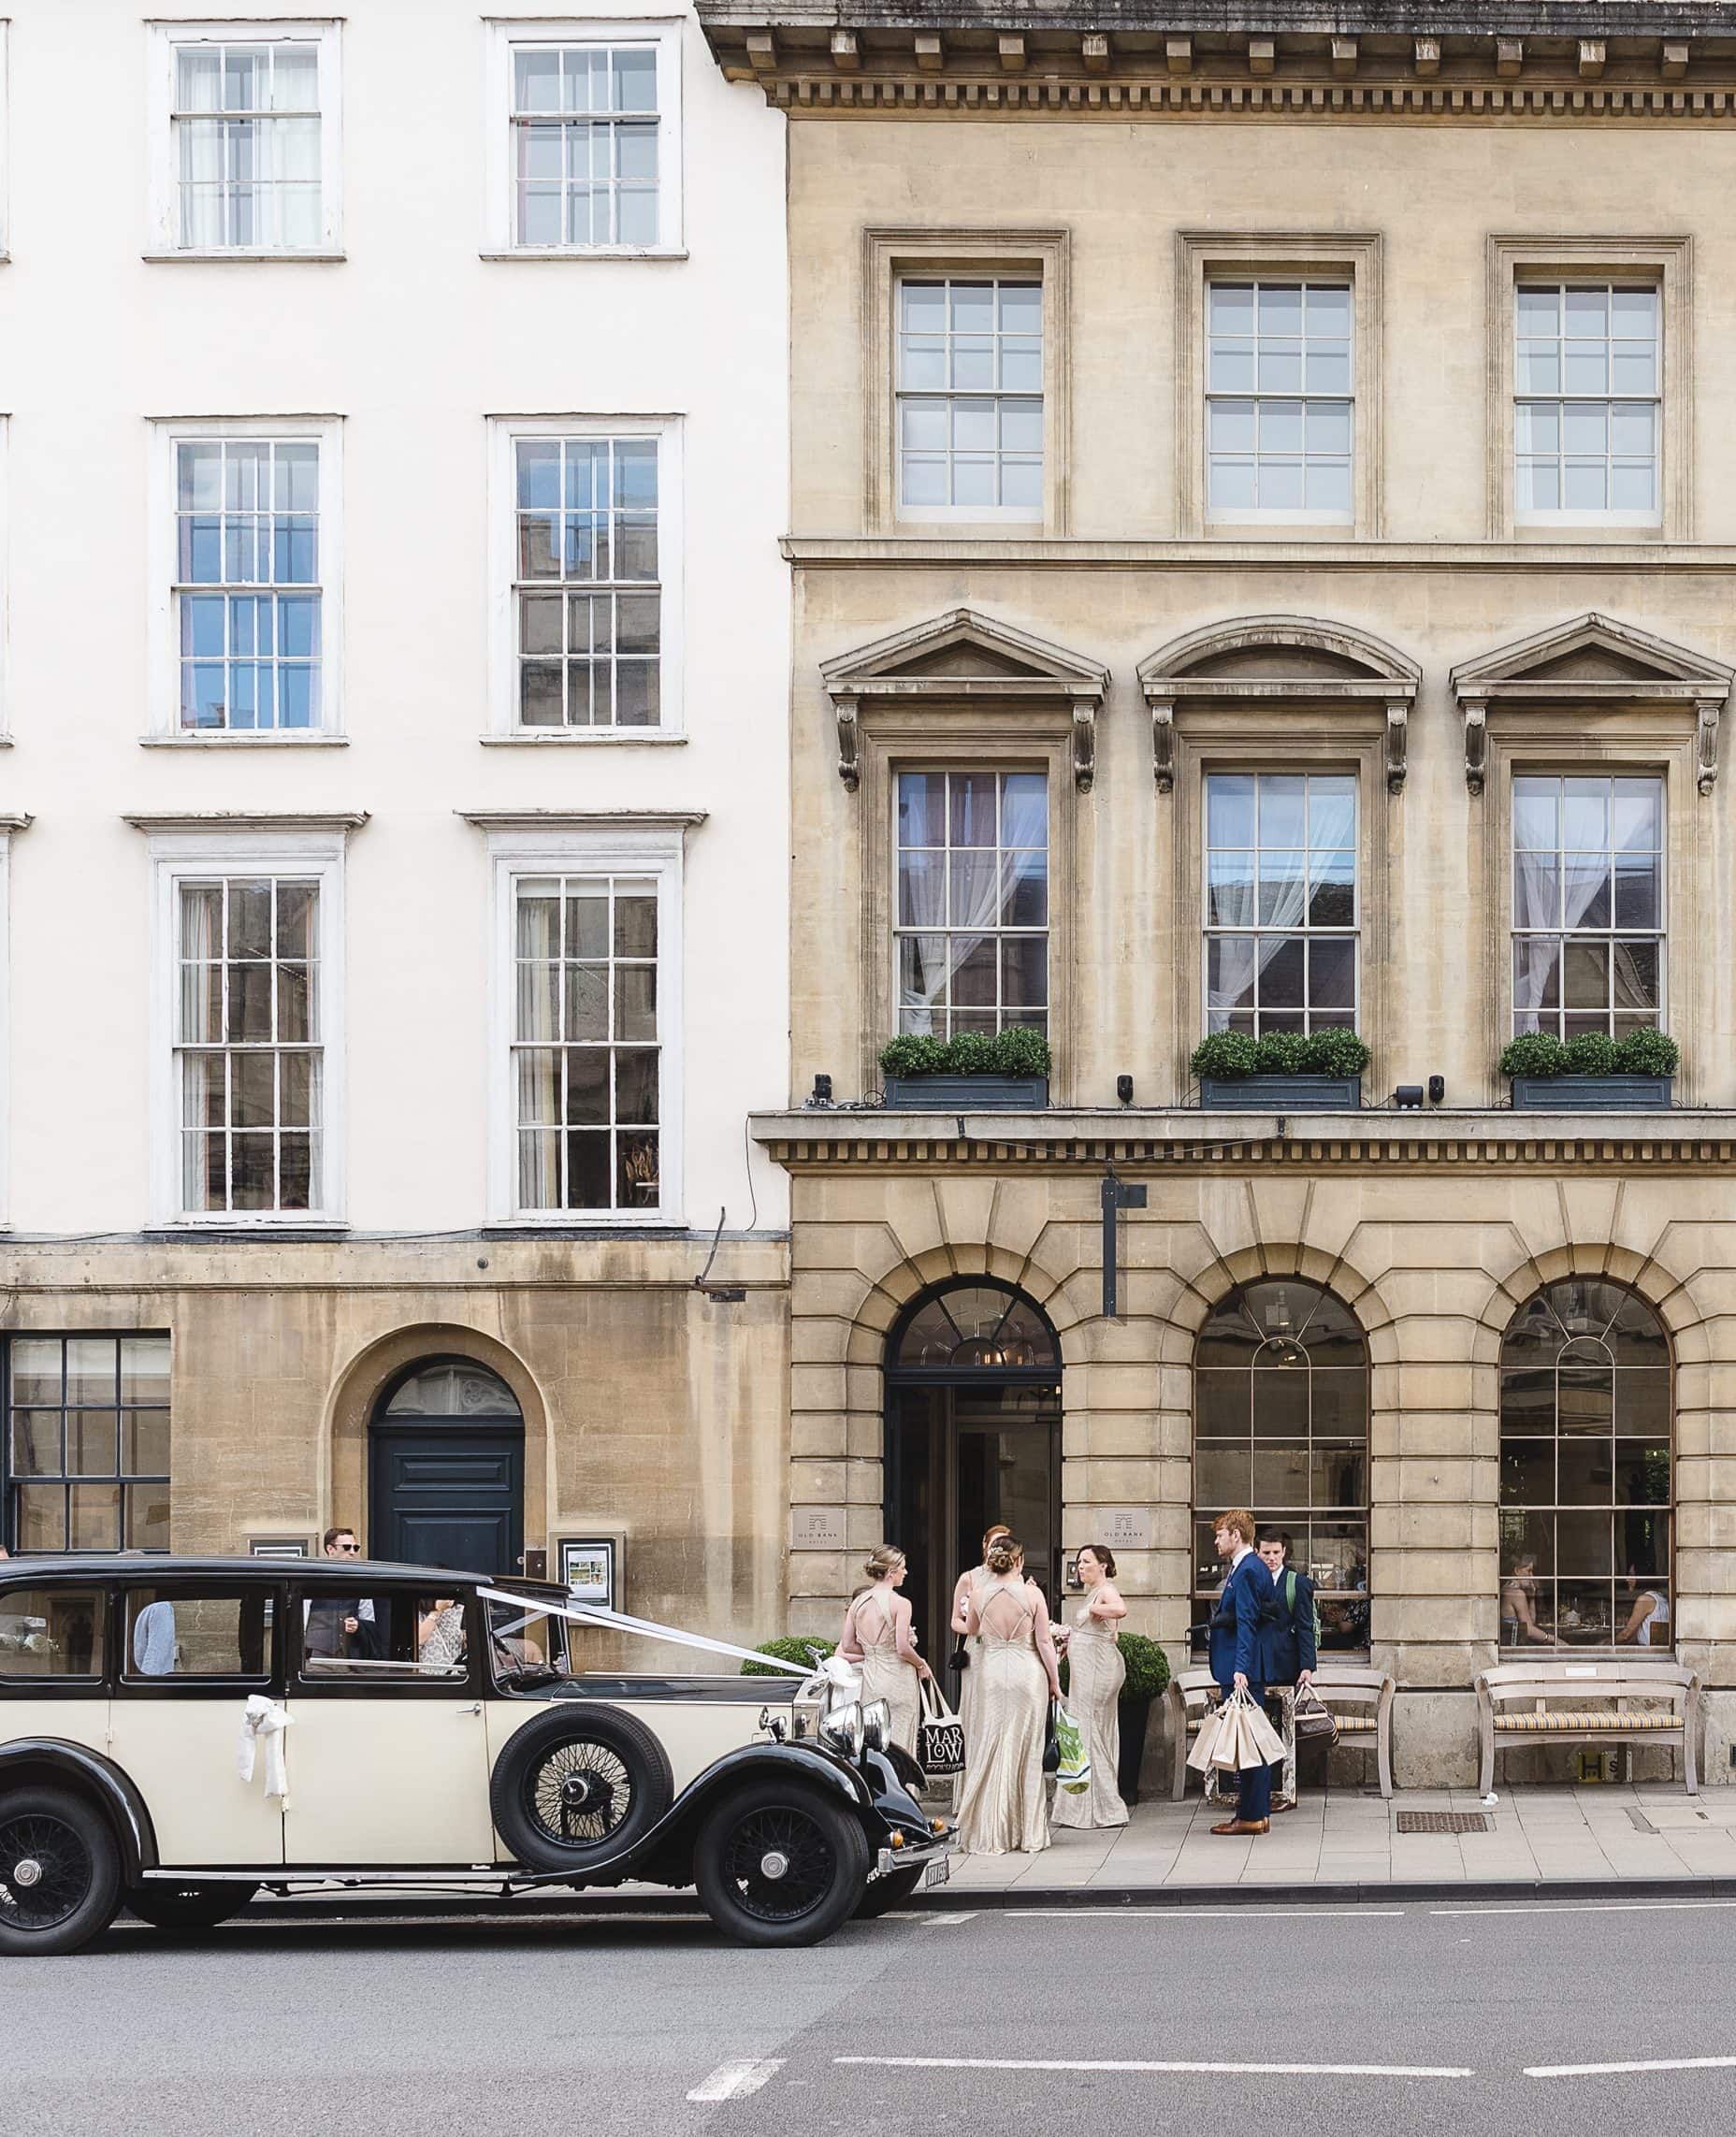 278-2021-Old-Bank-Hotel-Oxford-High-Res-Rebecca-Adam-Wedding-Facade-Building-Exterior-Vintage-Car-Web-Hero-aspect-ratio-1856-2285